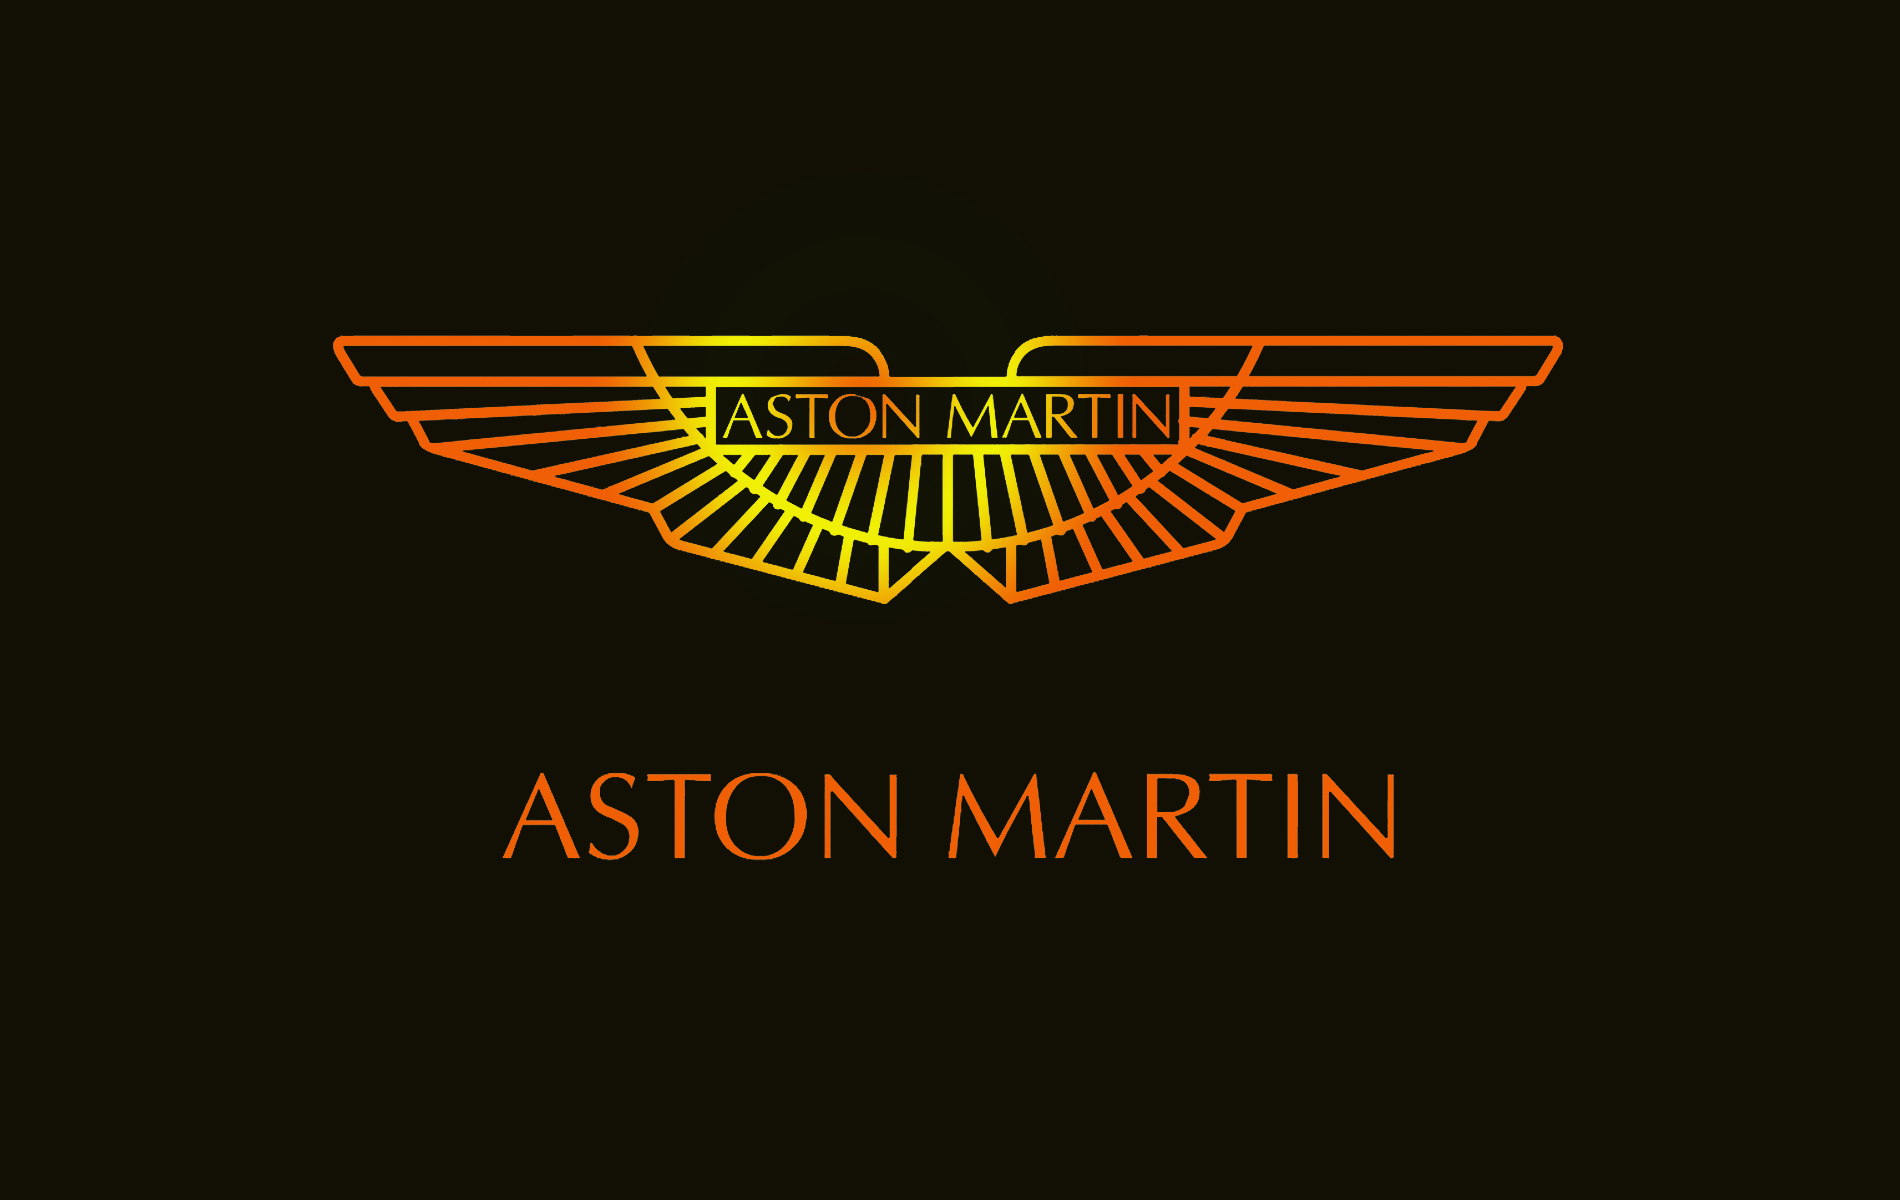 aston martin logo wallpaper,logo,text,font,emblem,brand